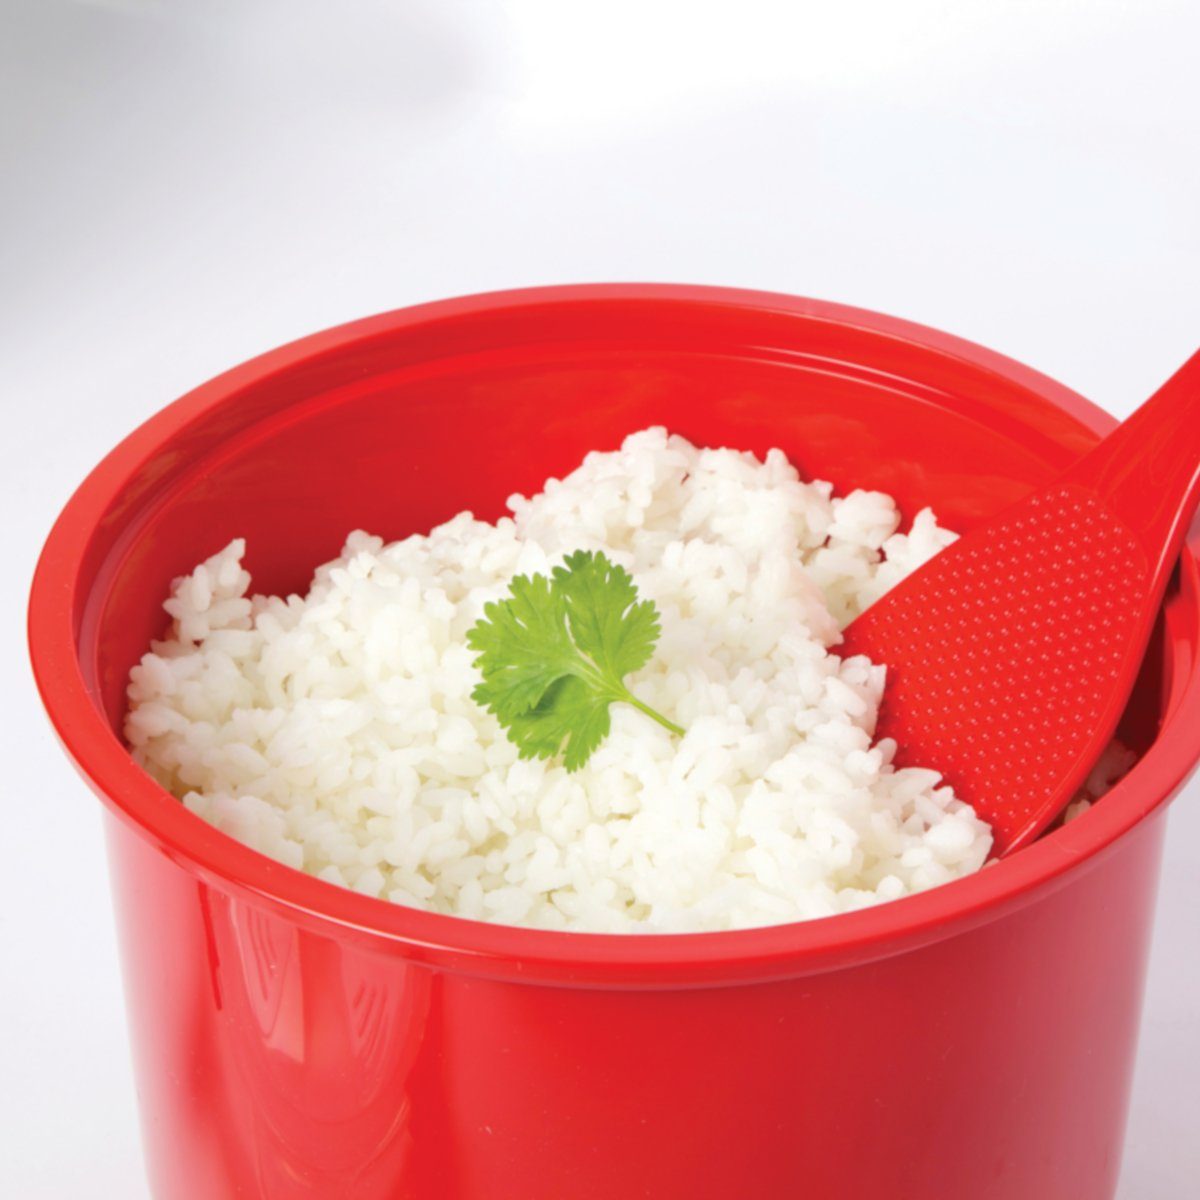 Mikrowellen Mikrowellenbehälter Kunststoff l, sistema (lebensmittelecht) Reiskocher, 2.6